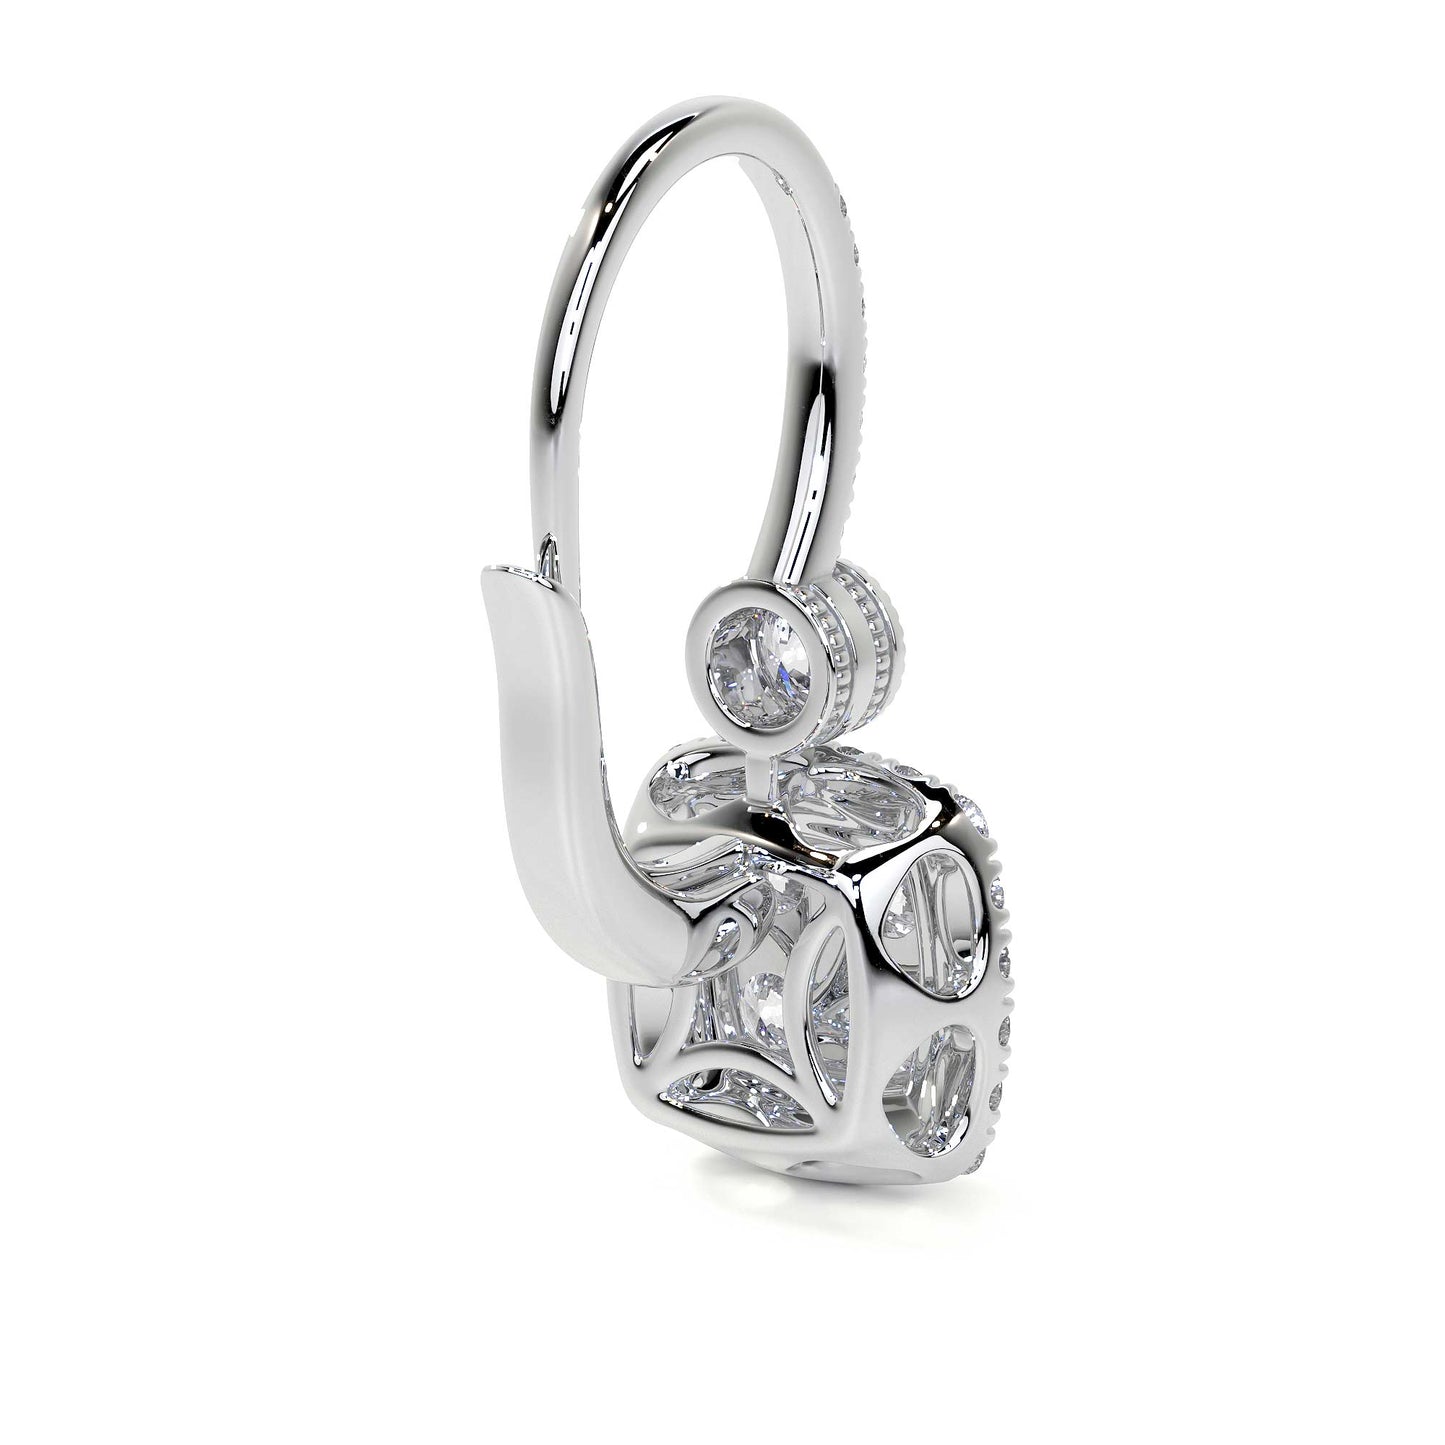 Square Drop Cluster Diamond Earrings